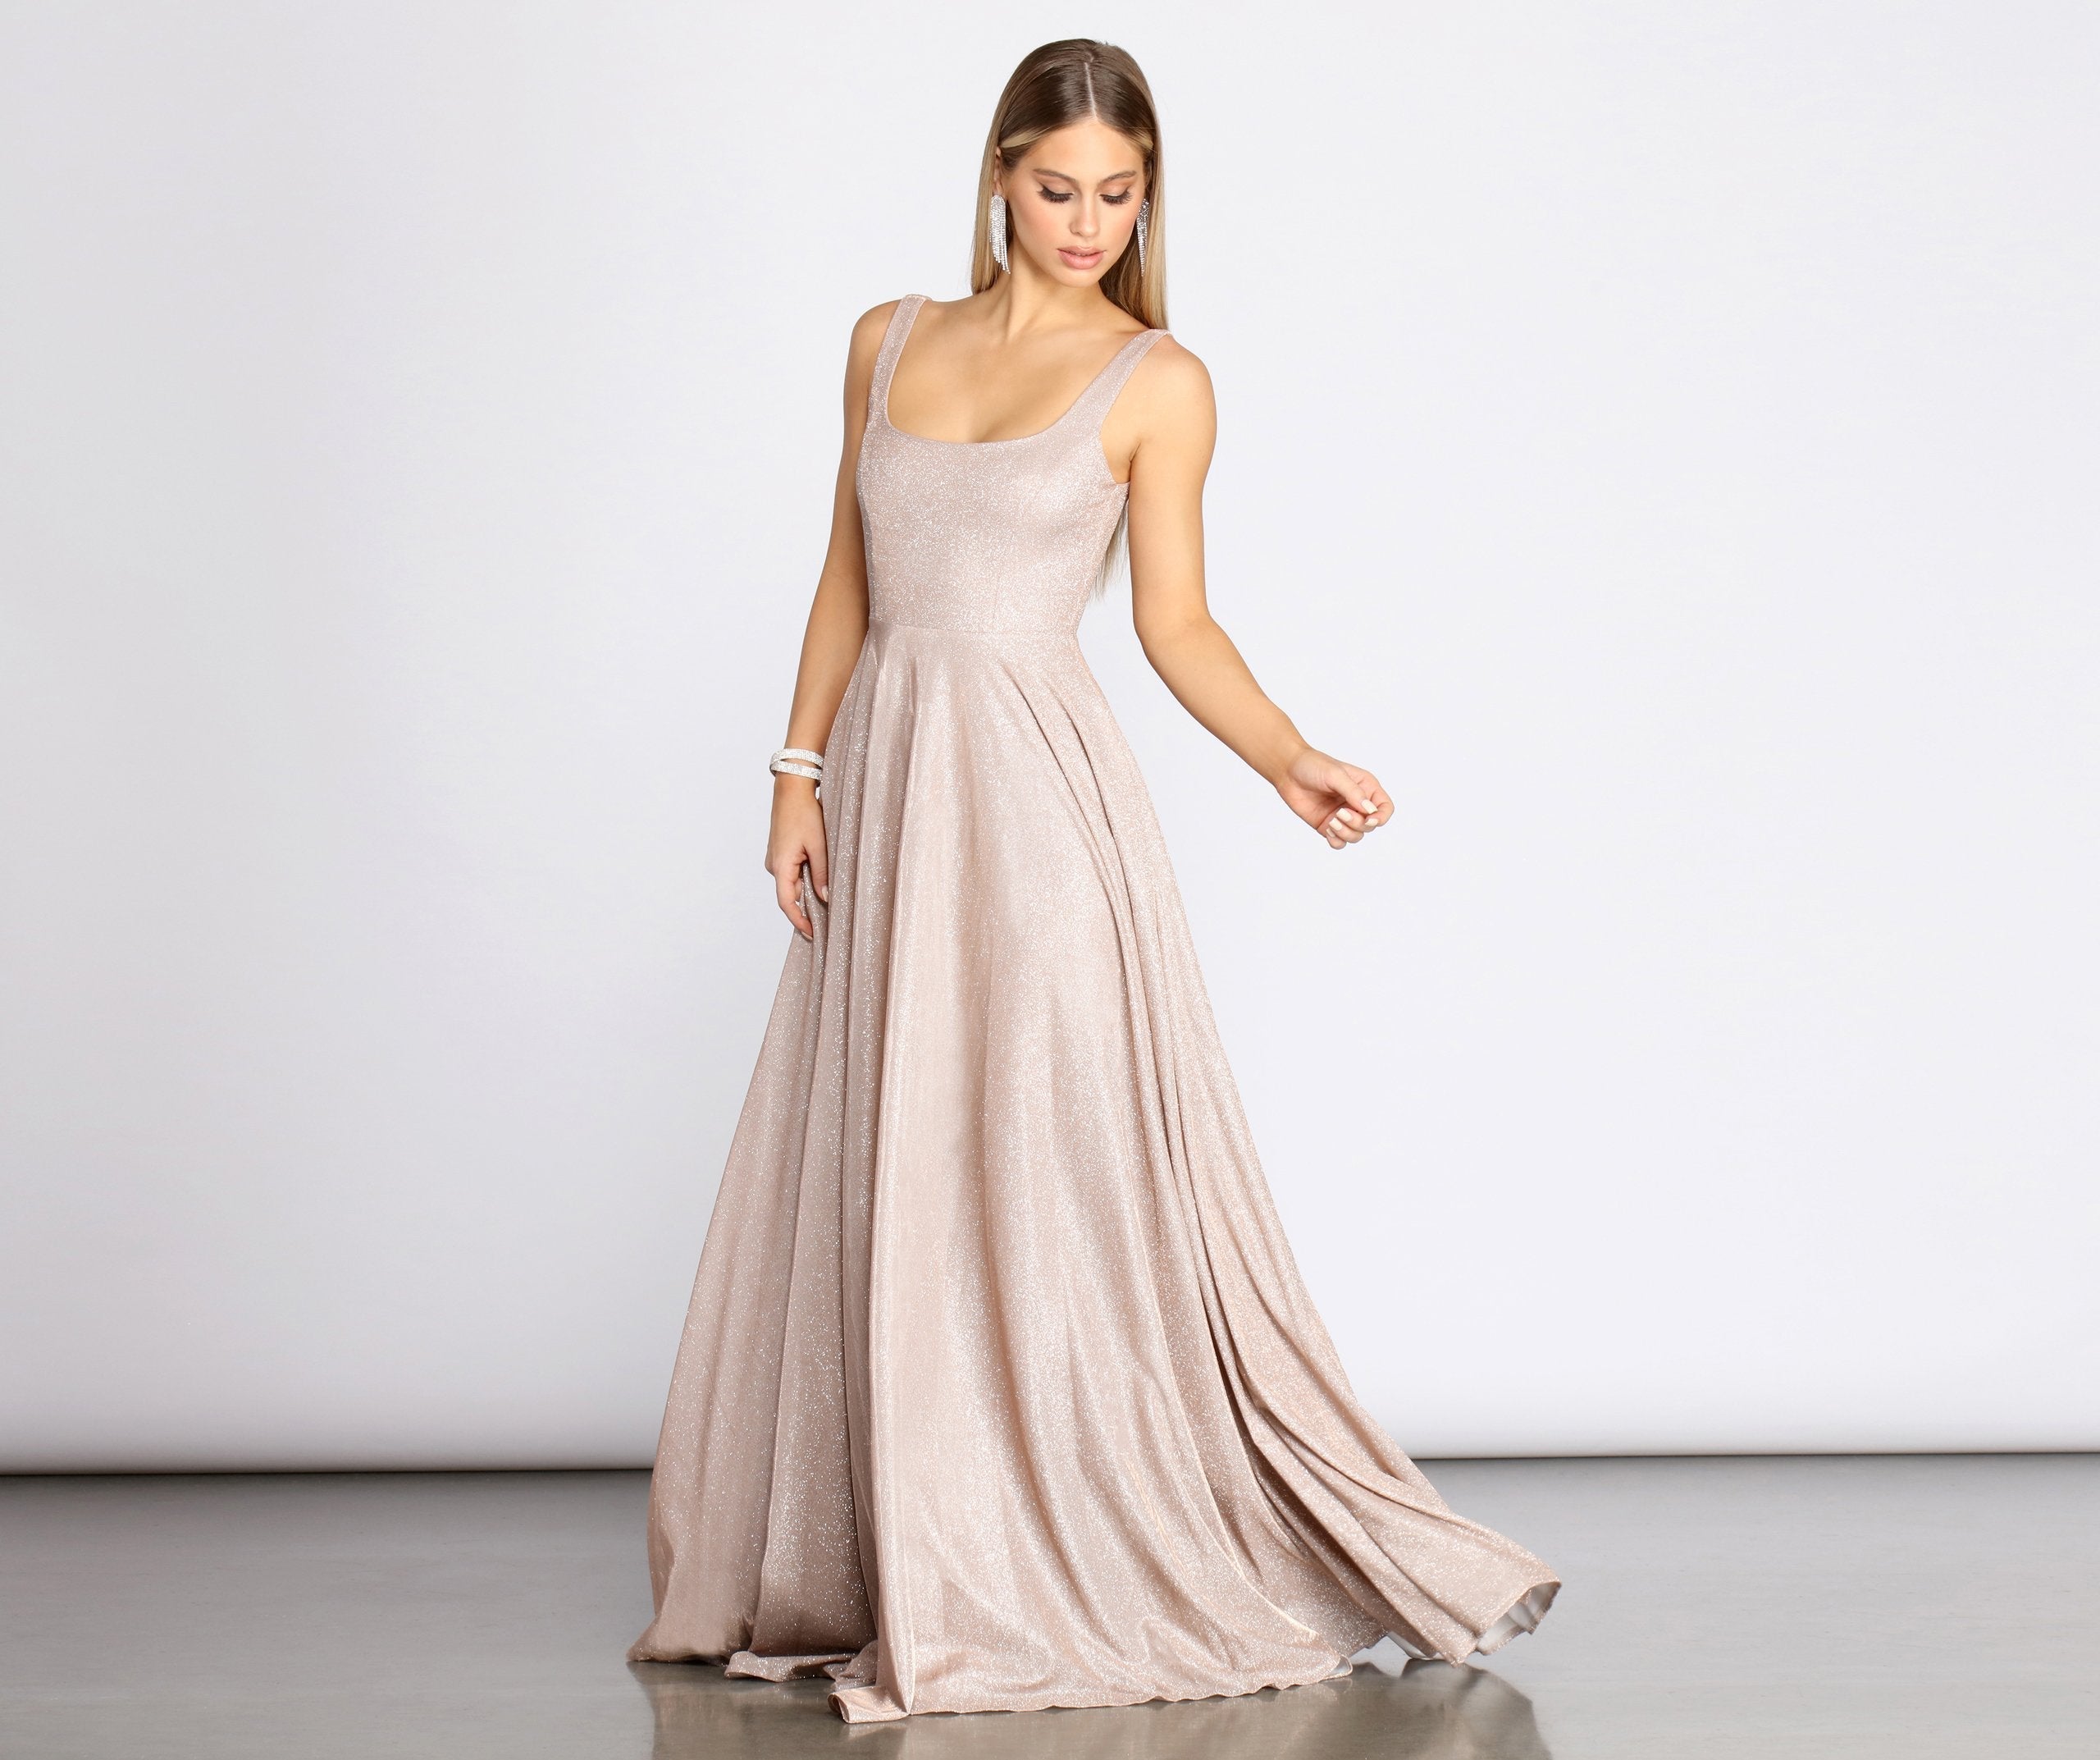 Emery Formal Glitter A-Line Dress Oshnow